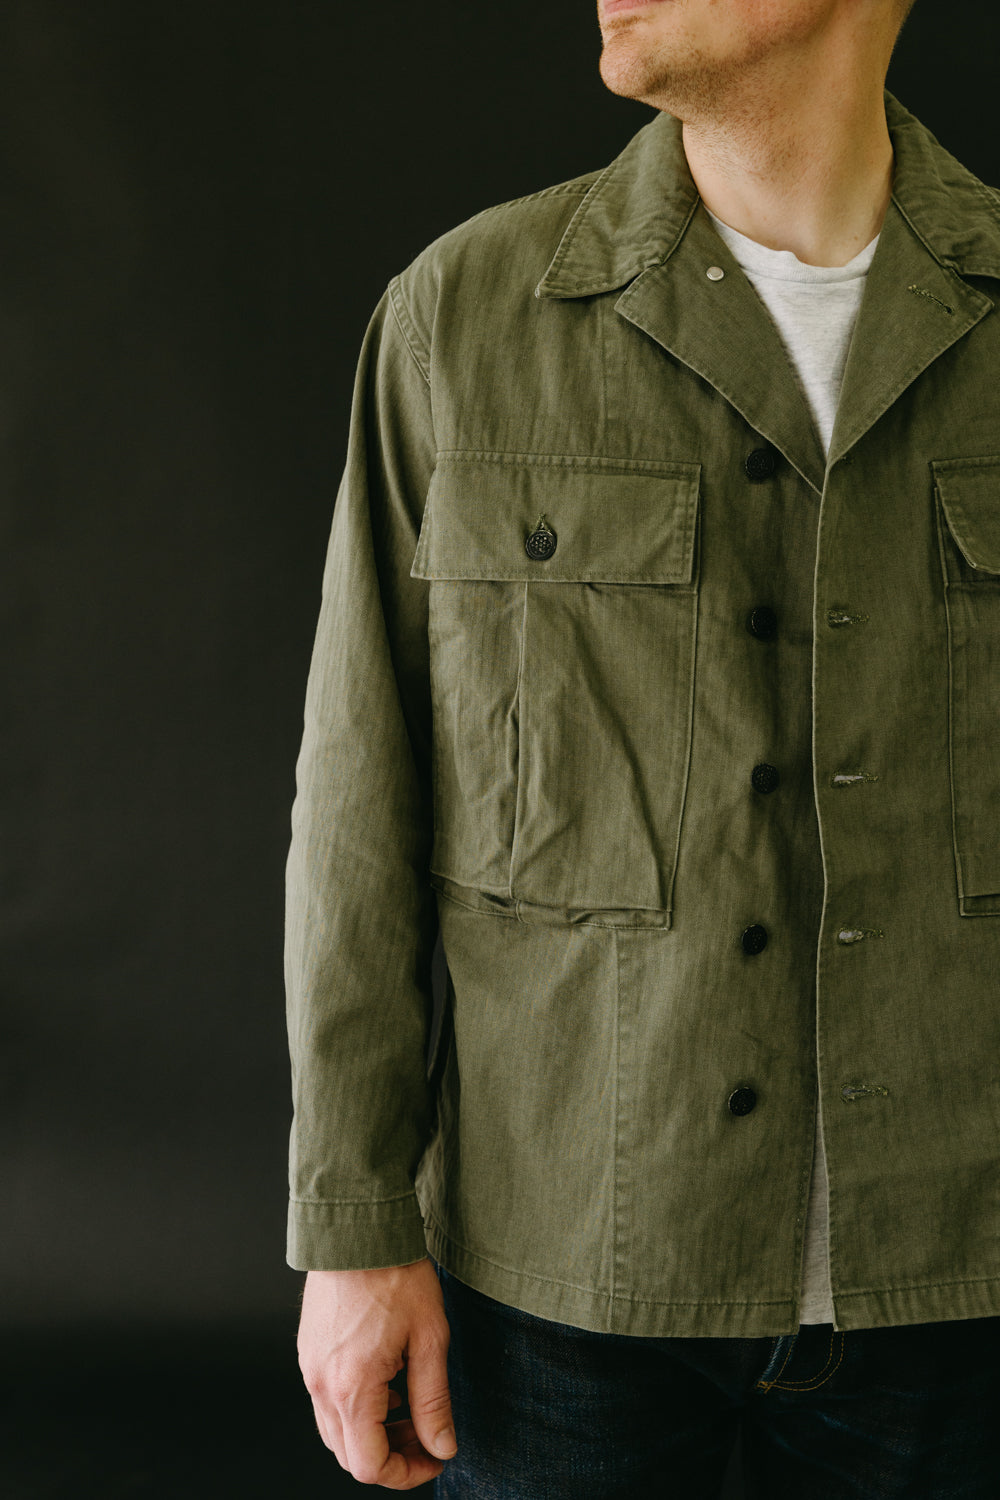 01-6046-76 - US M-43 HBT Jacket - Army Green